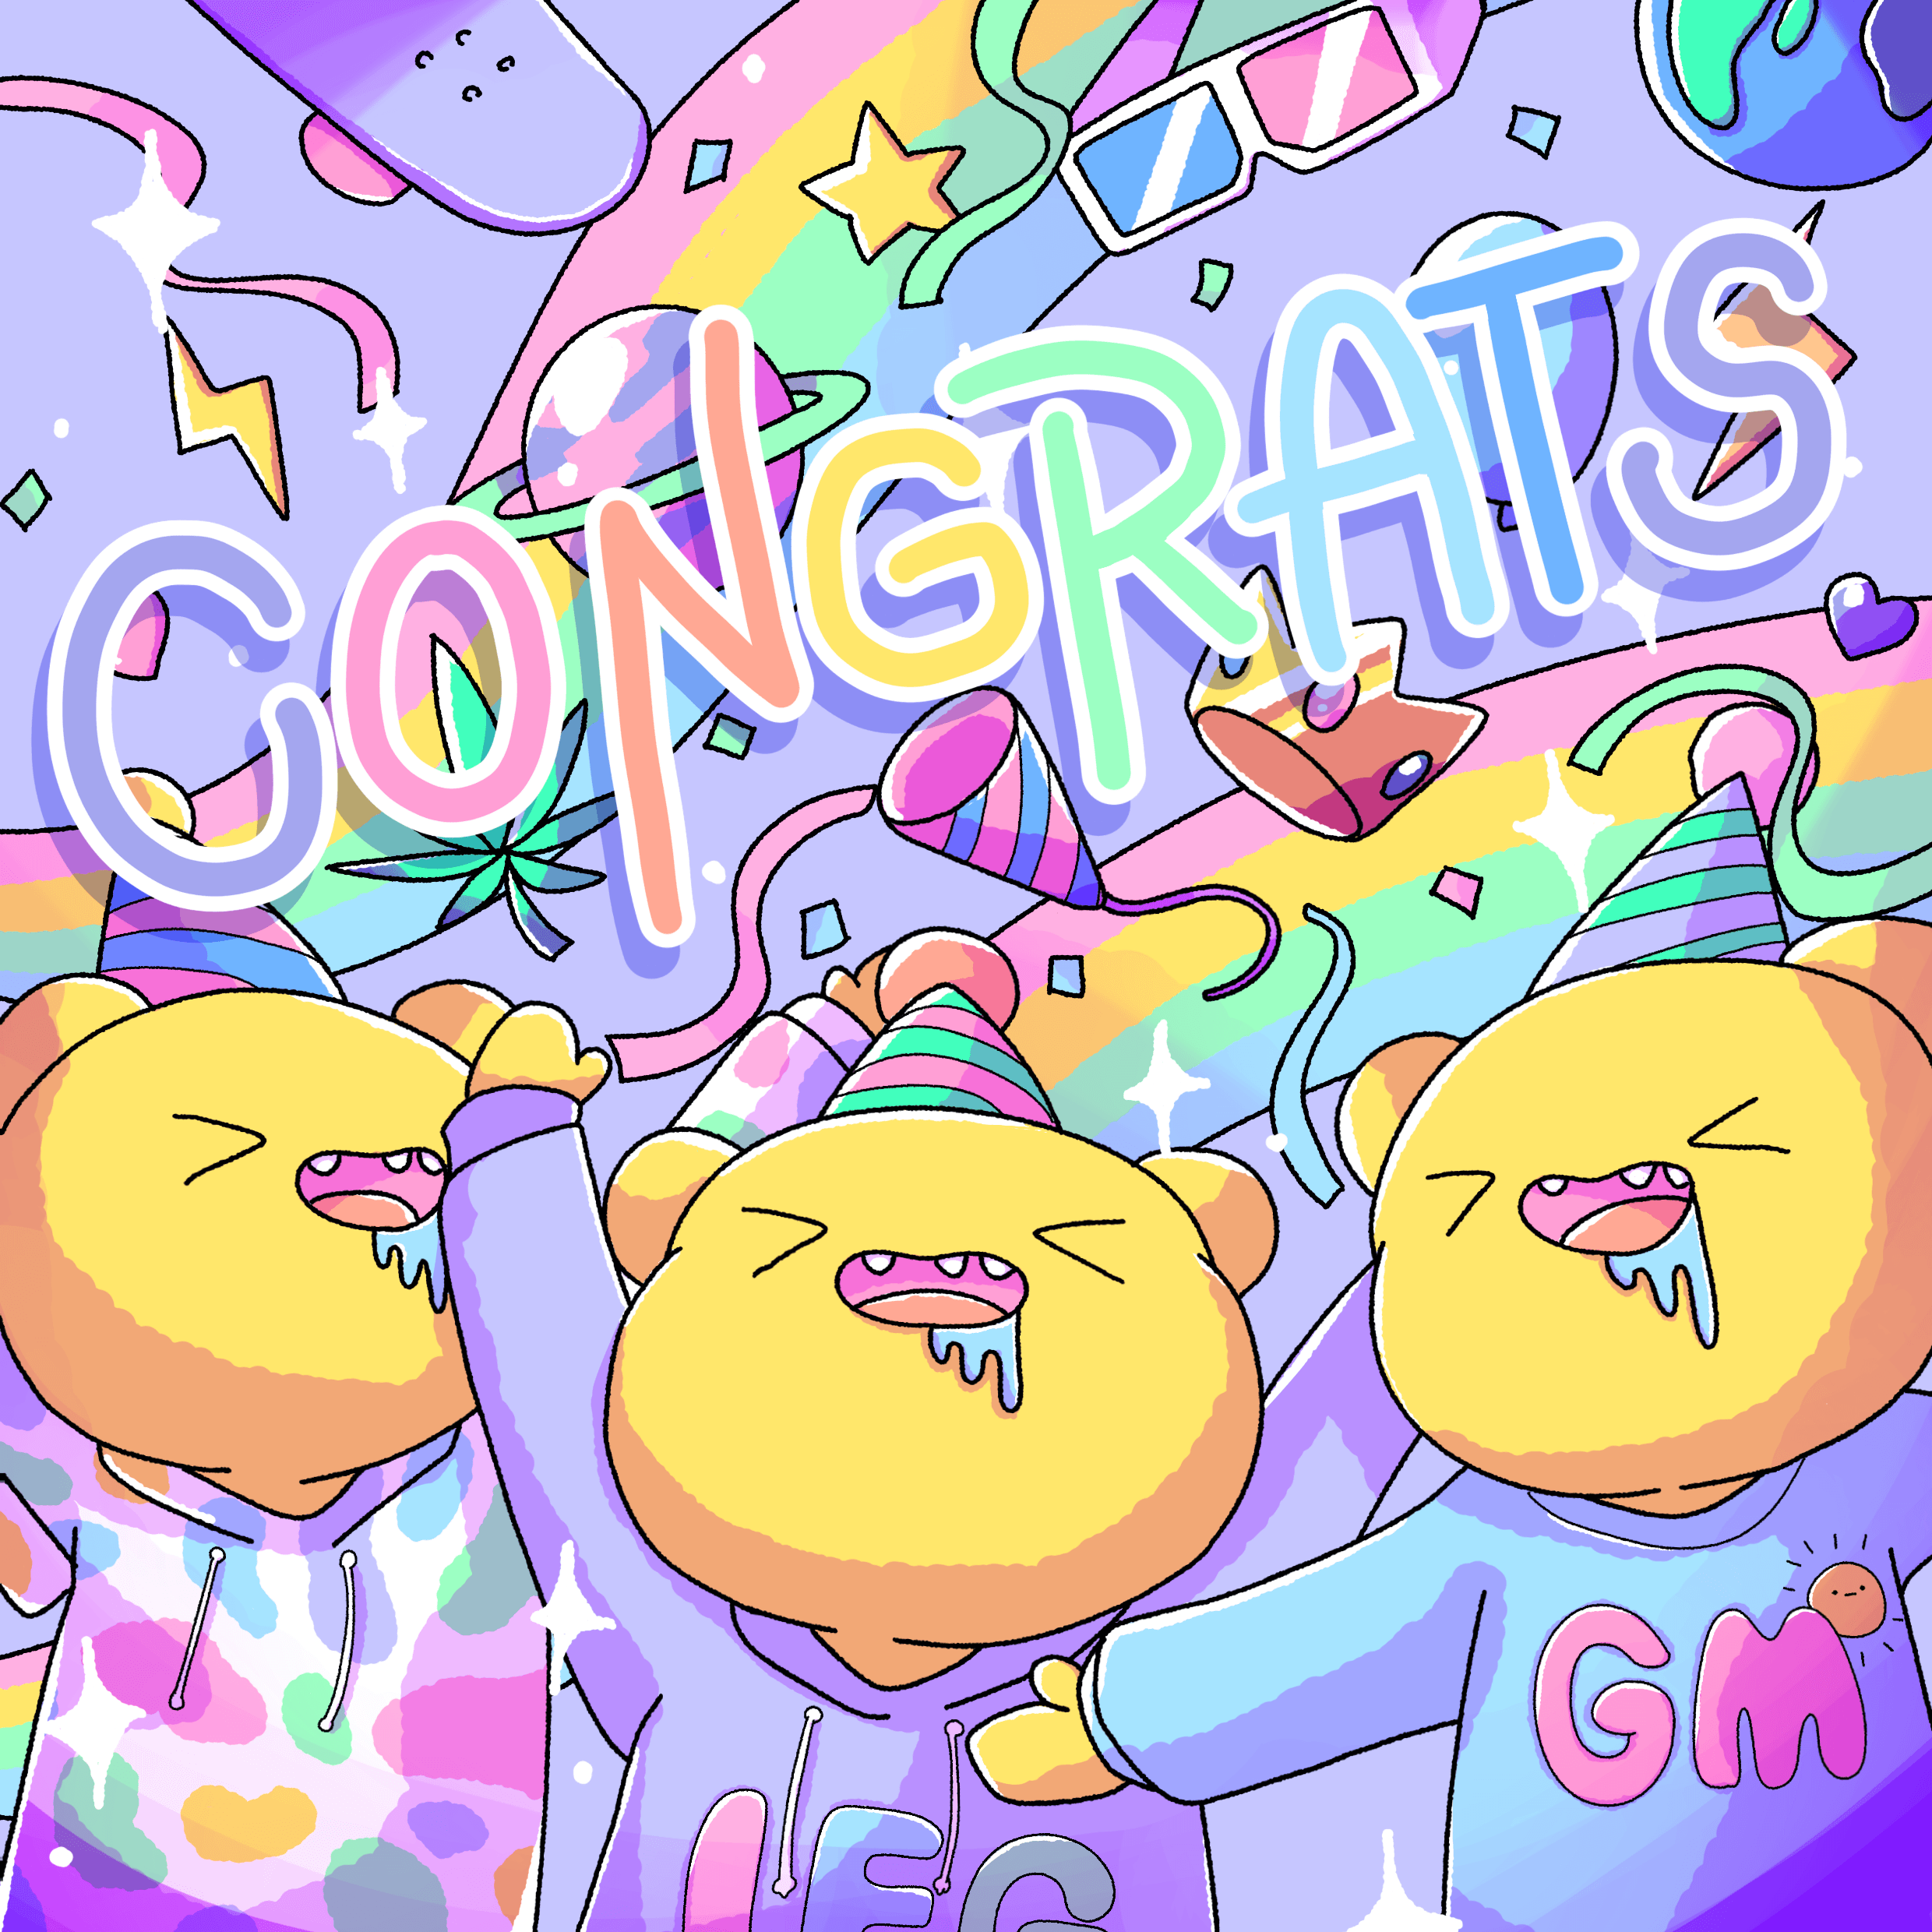 Congrats bears!